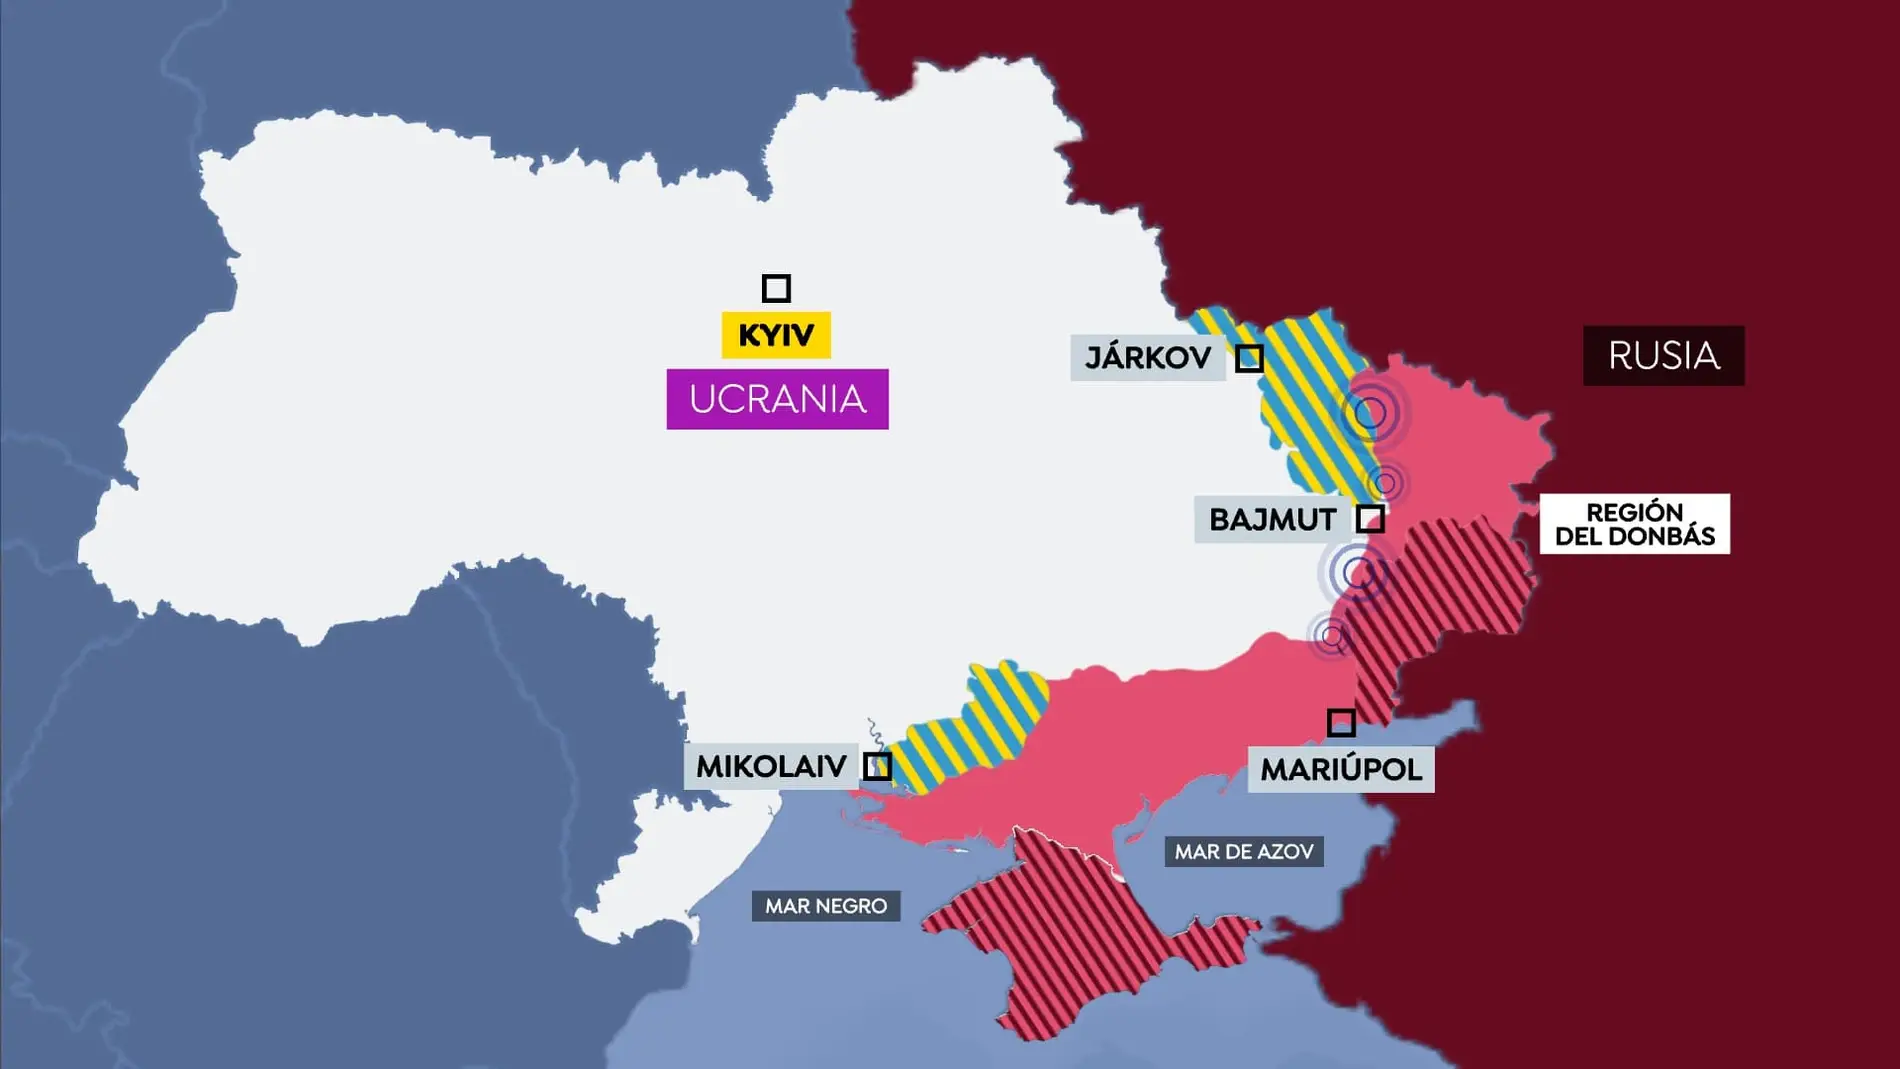 El mapa actual de Ucrania